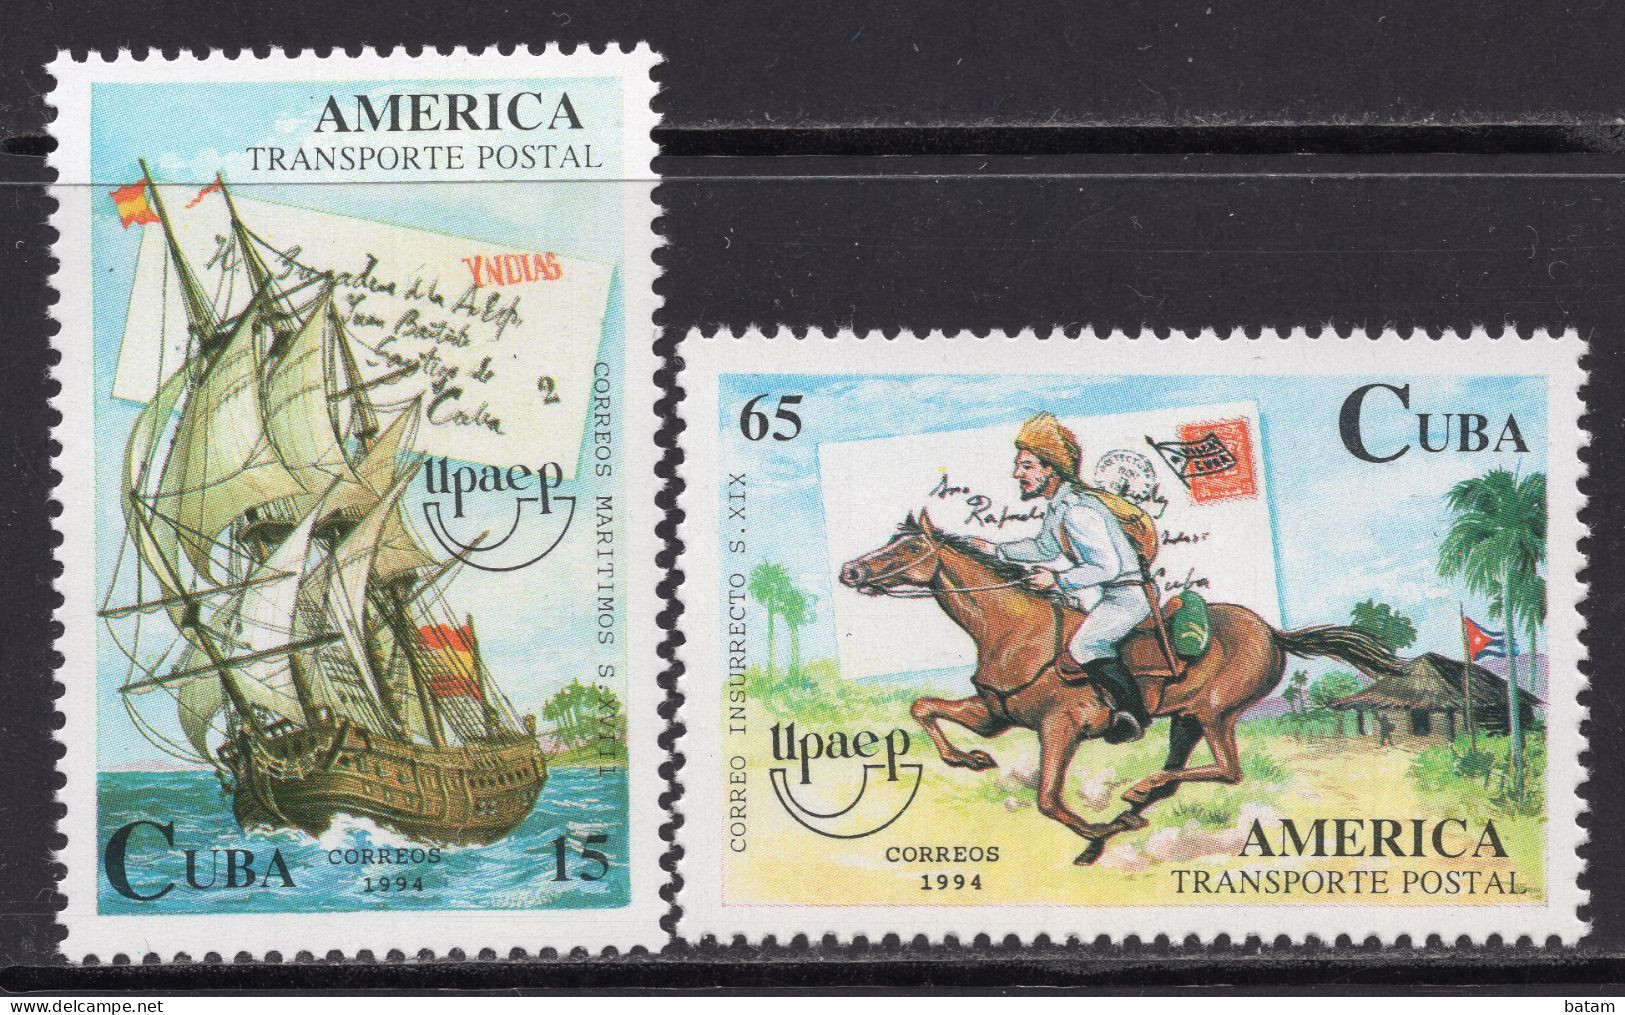 CUBA 1994 - Postal Transport - America - Ship - Hors - MNH Set - Ongebruikt